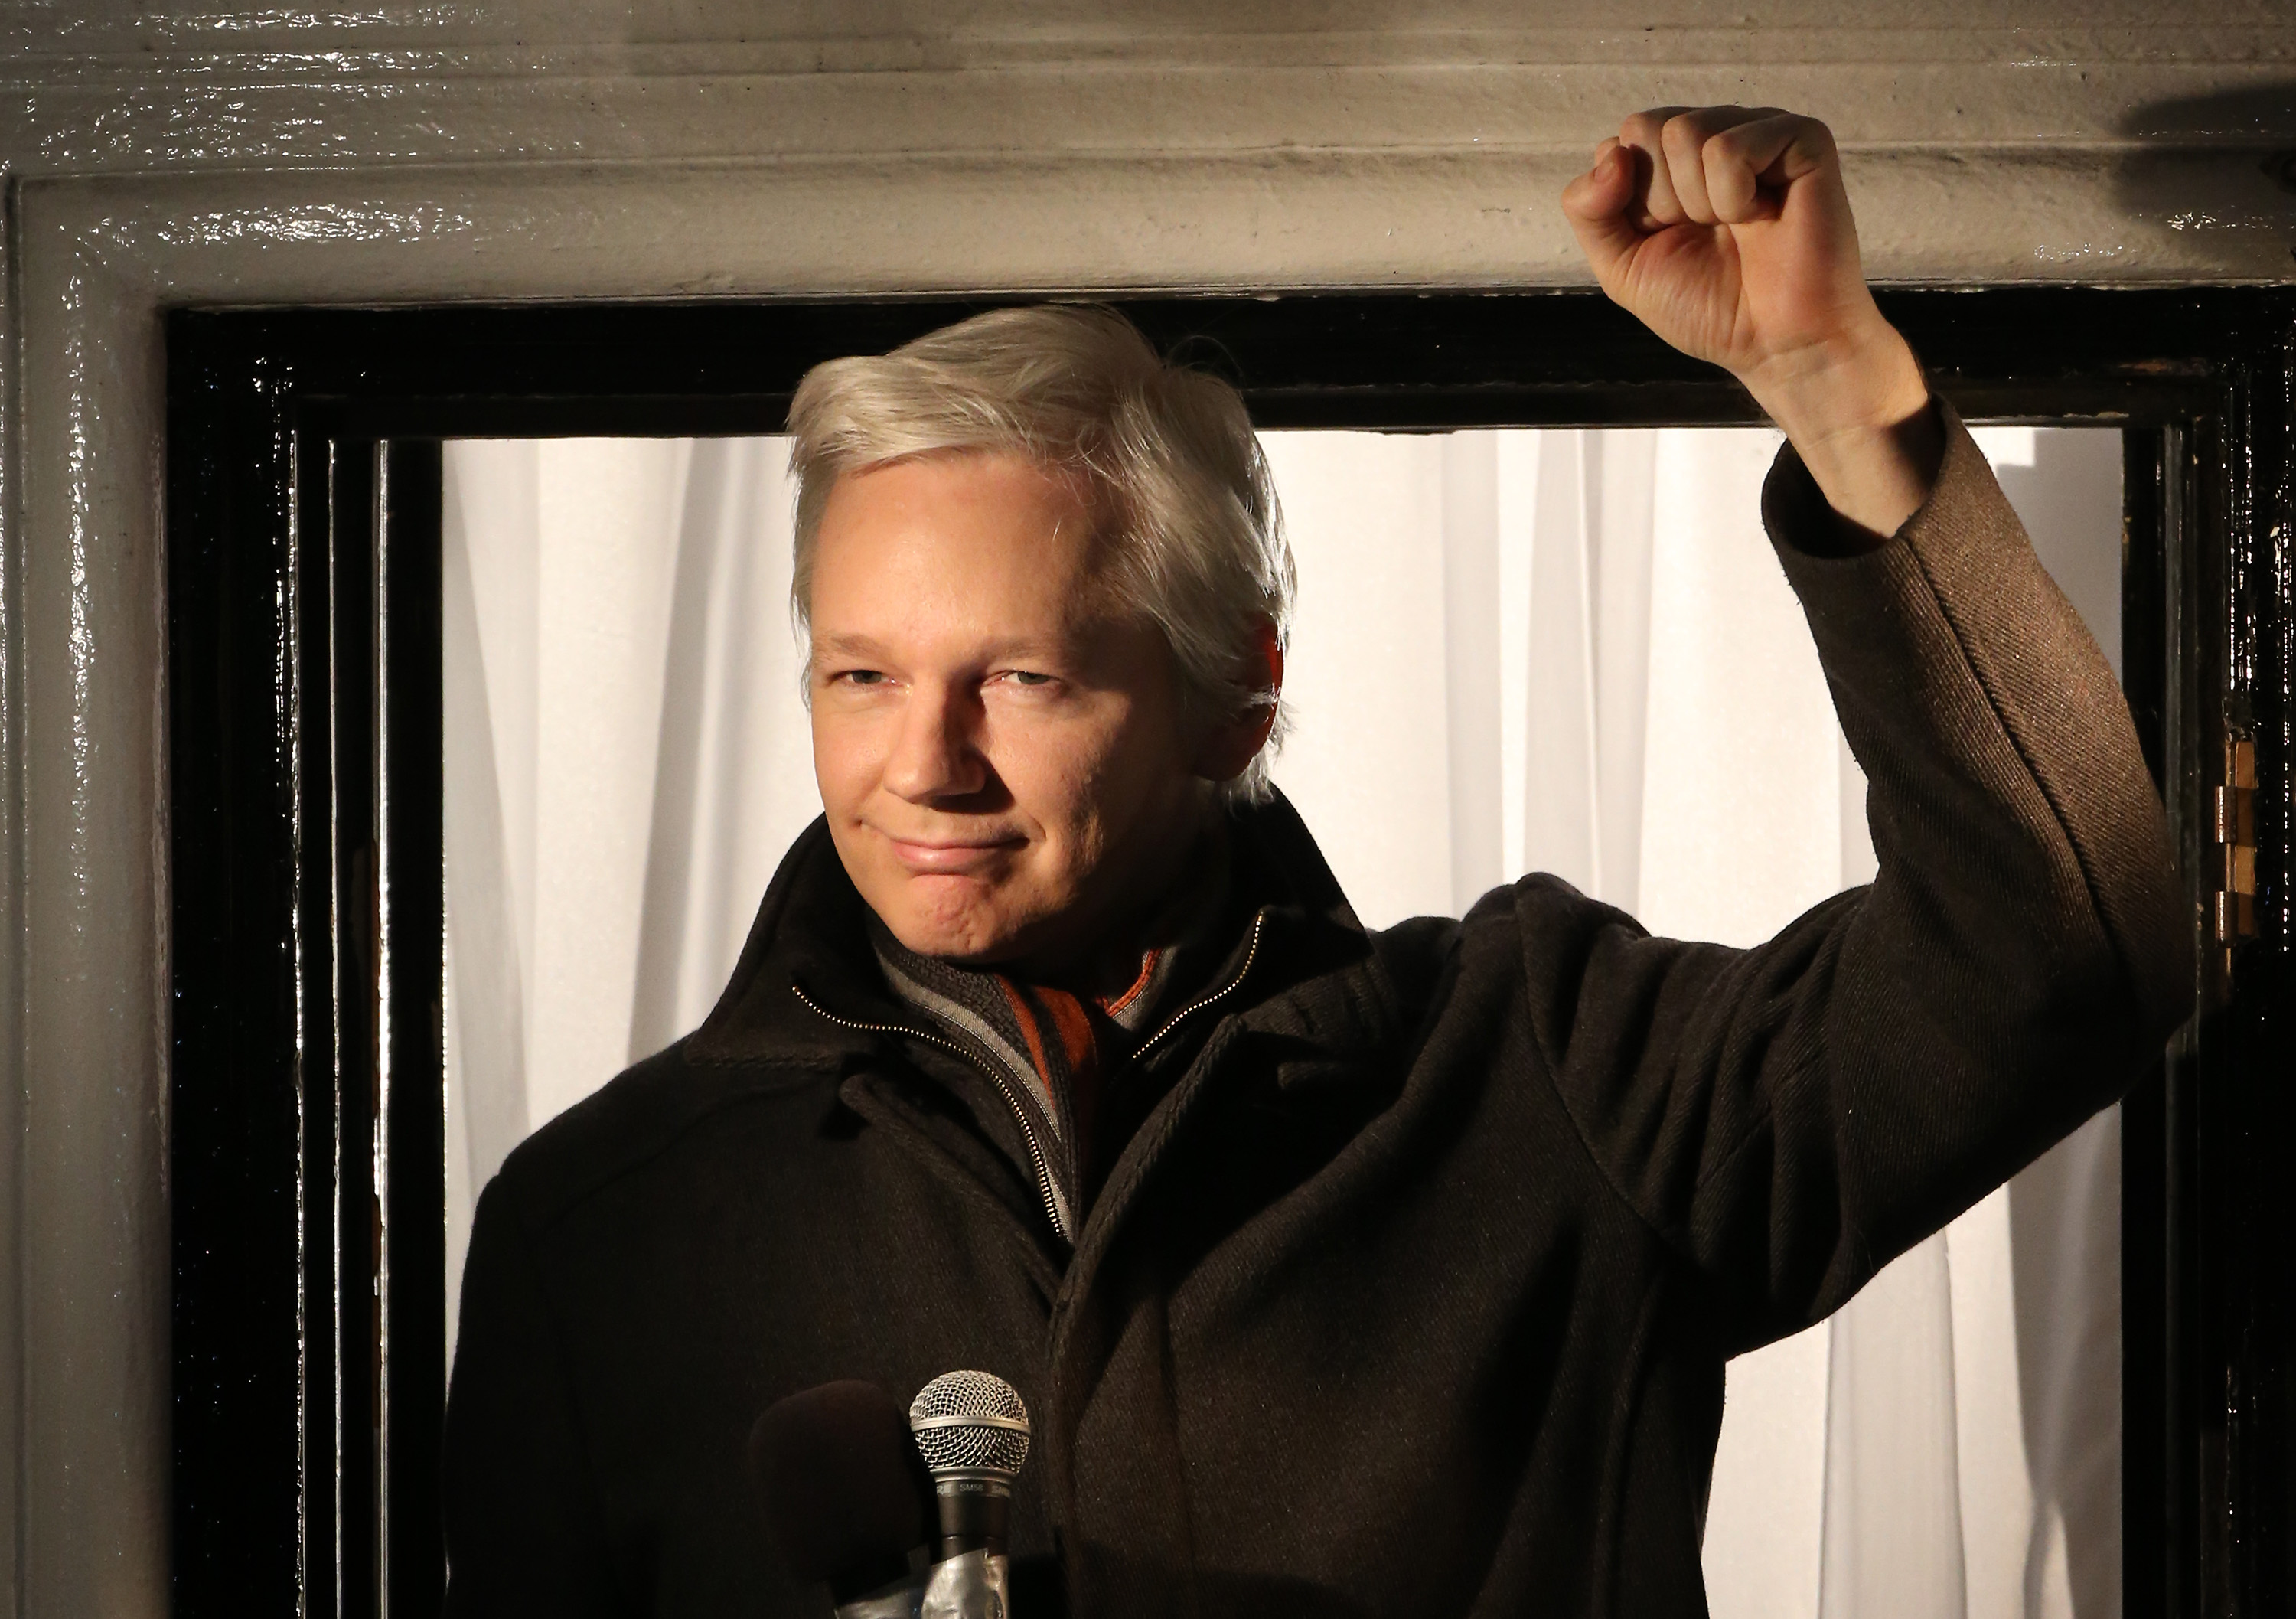 Wikileaks Founder Julian Assange Makes A Statement After Six Months Residing At The Ecuadorian Embassy